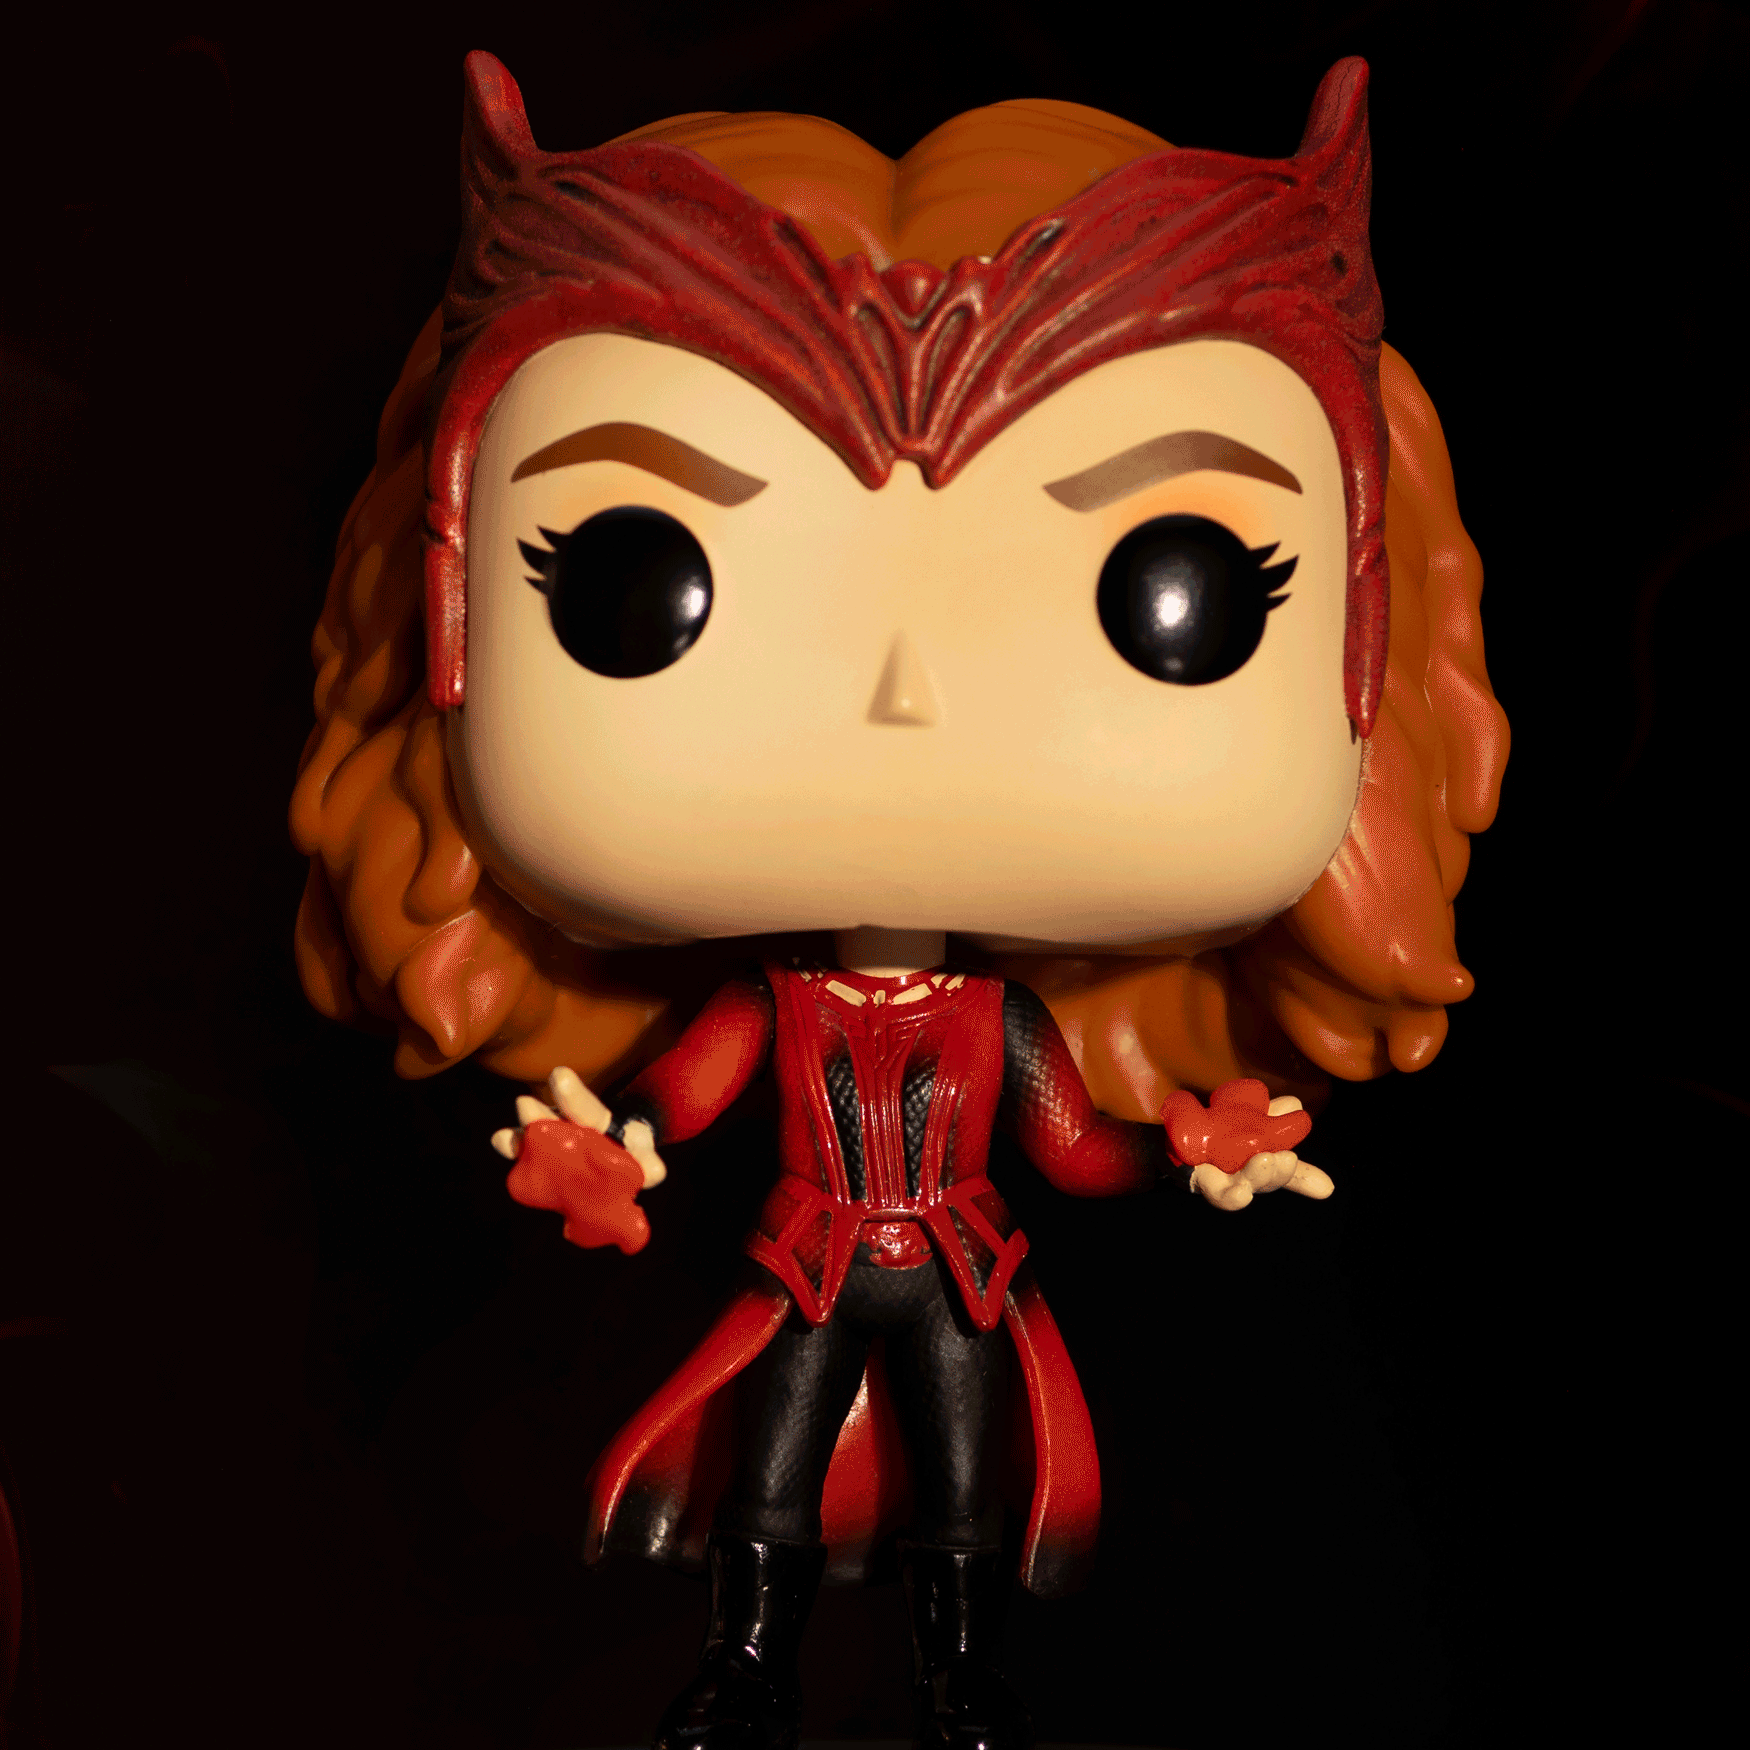 Glow in the Dark Scarlet Witch Figure